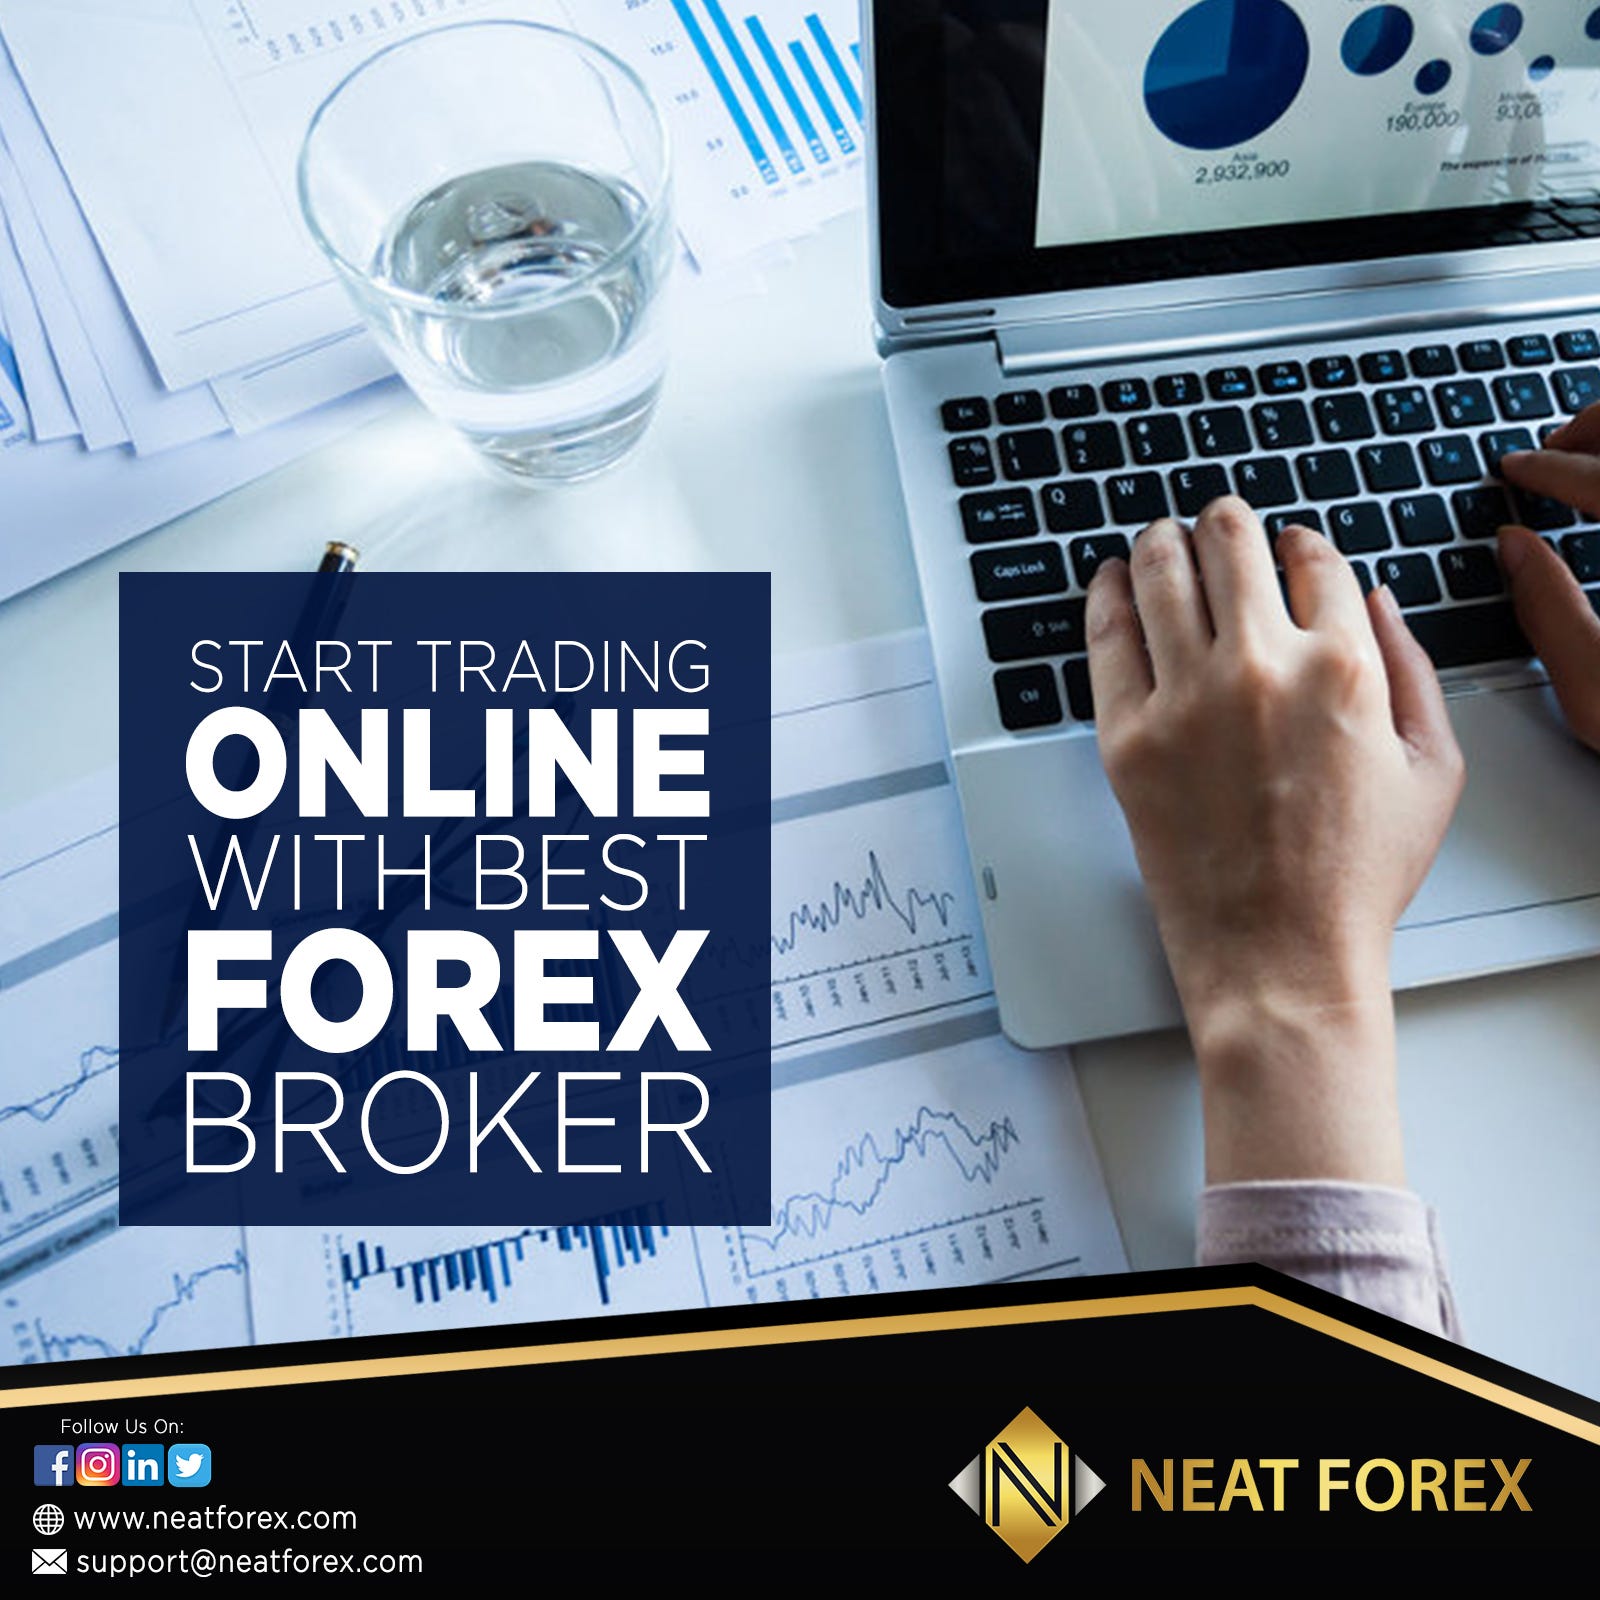 Start Trading With Best Forex Broker Neatforex Neat Forex Medium